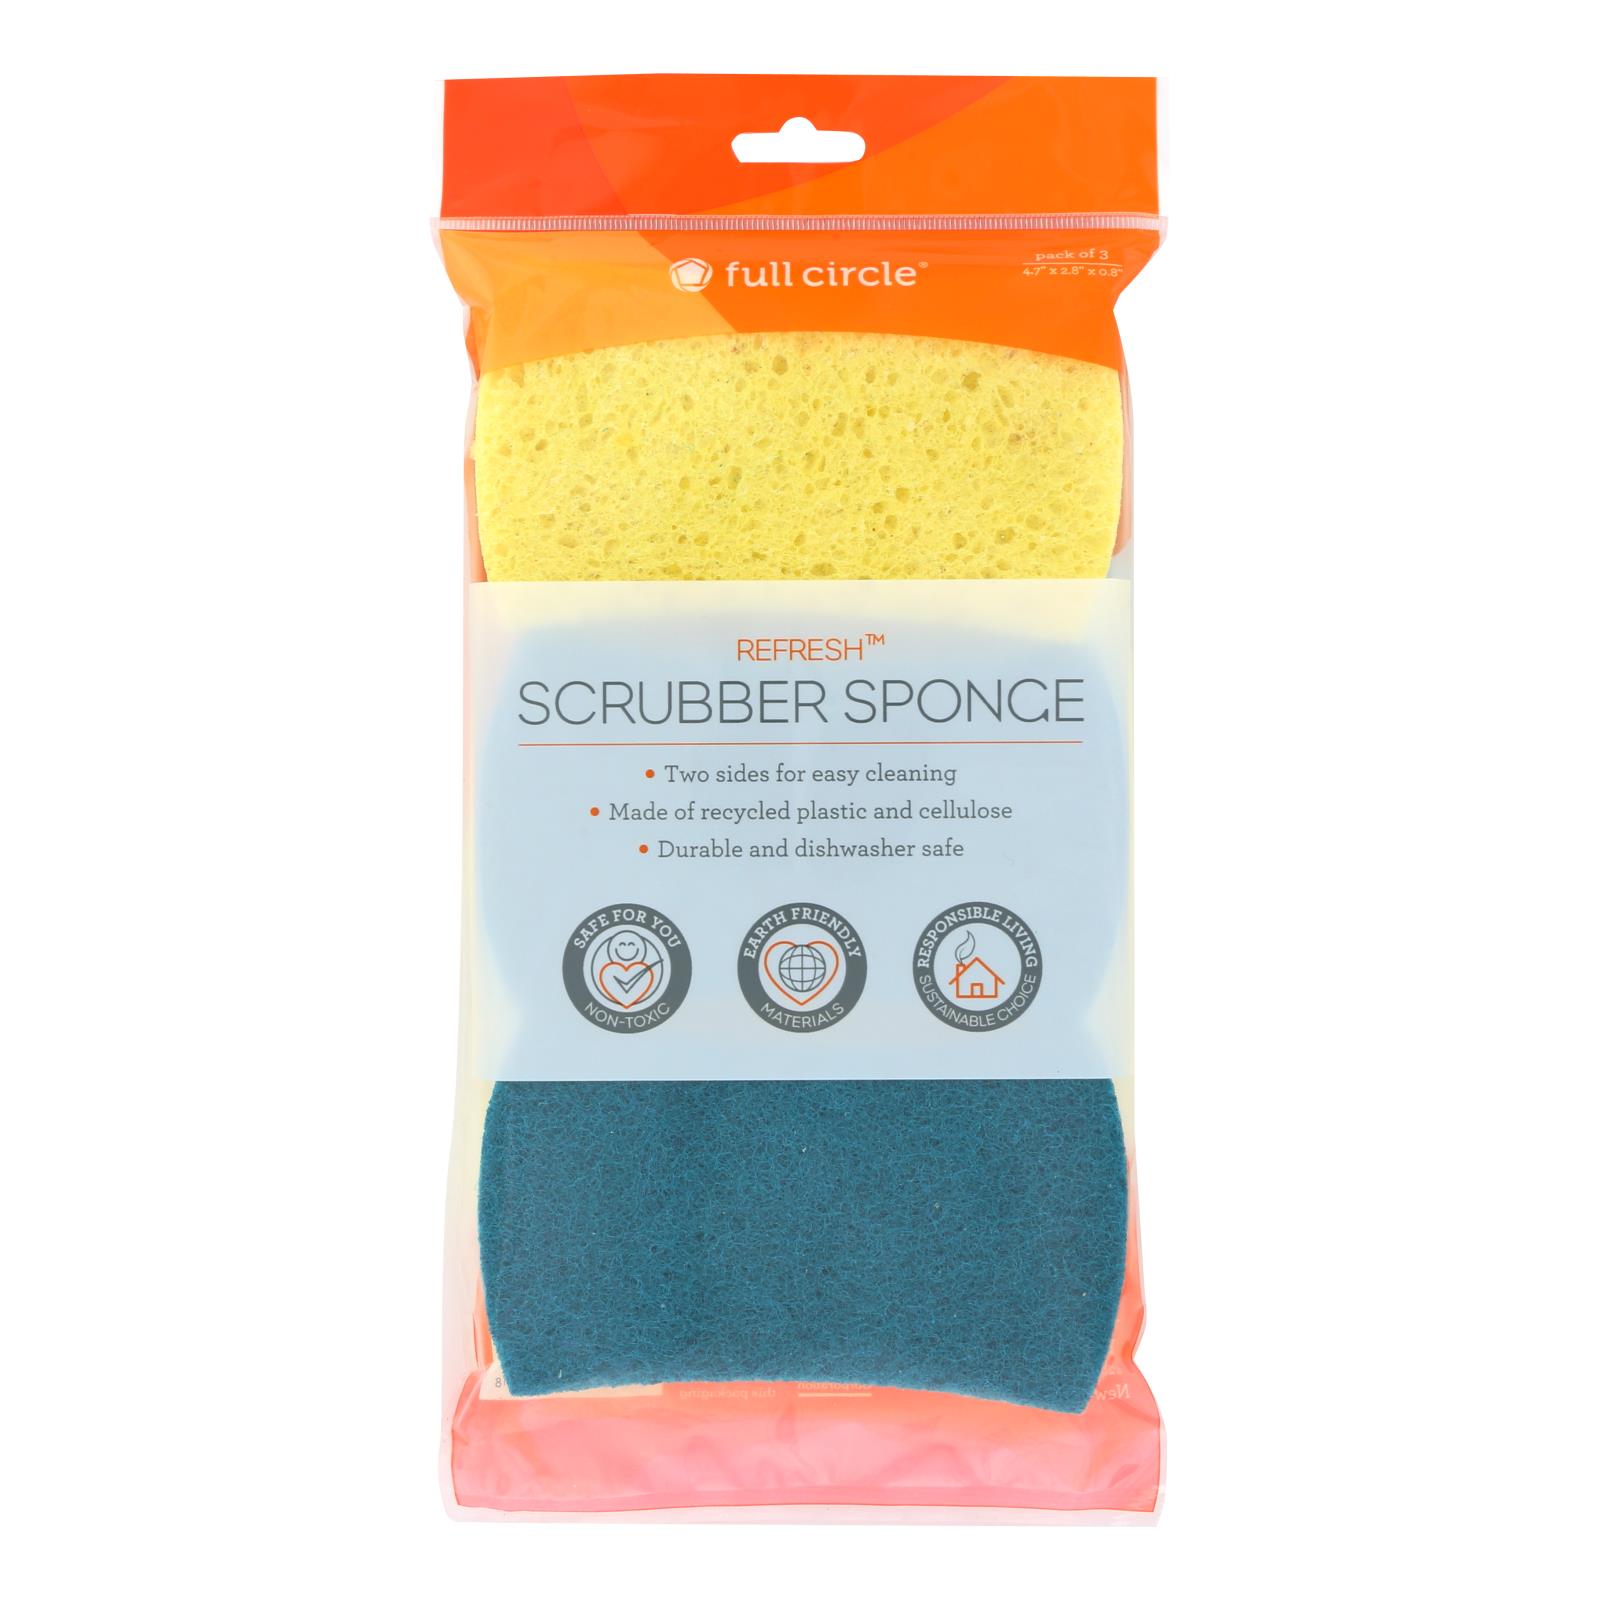 Full Circle Home - Sponge Scrub Refresh 2in1 - Case of 6 - 3 CT